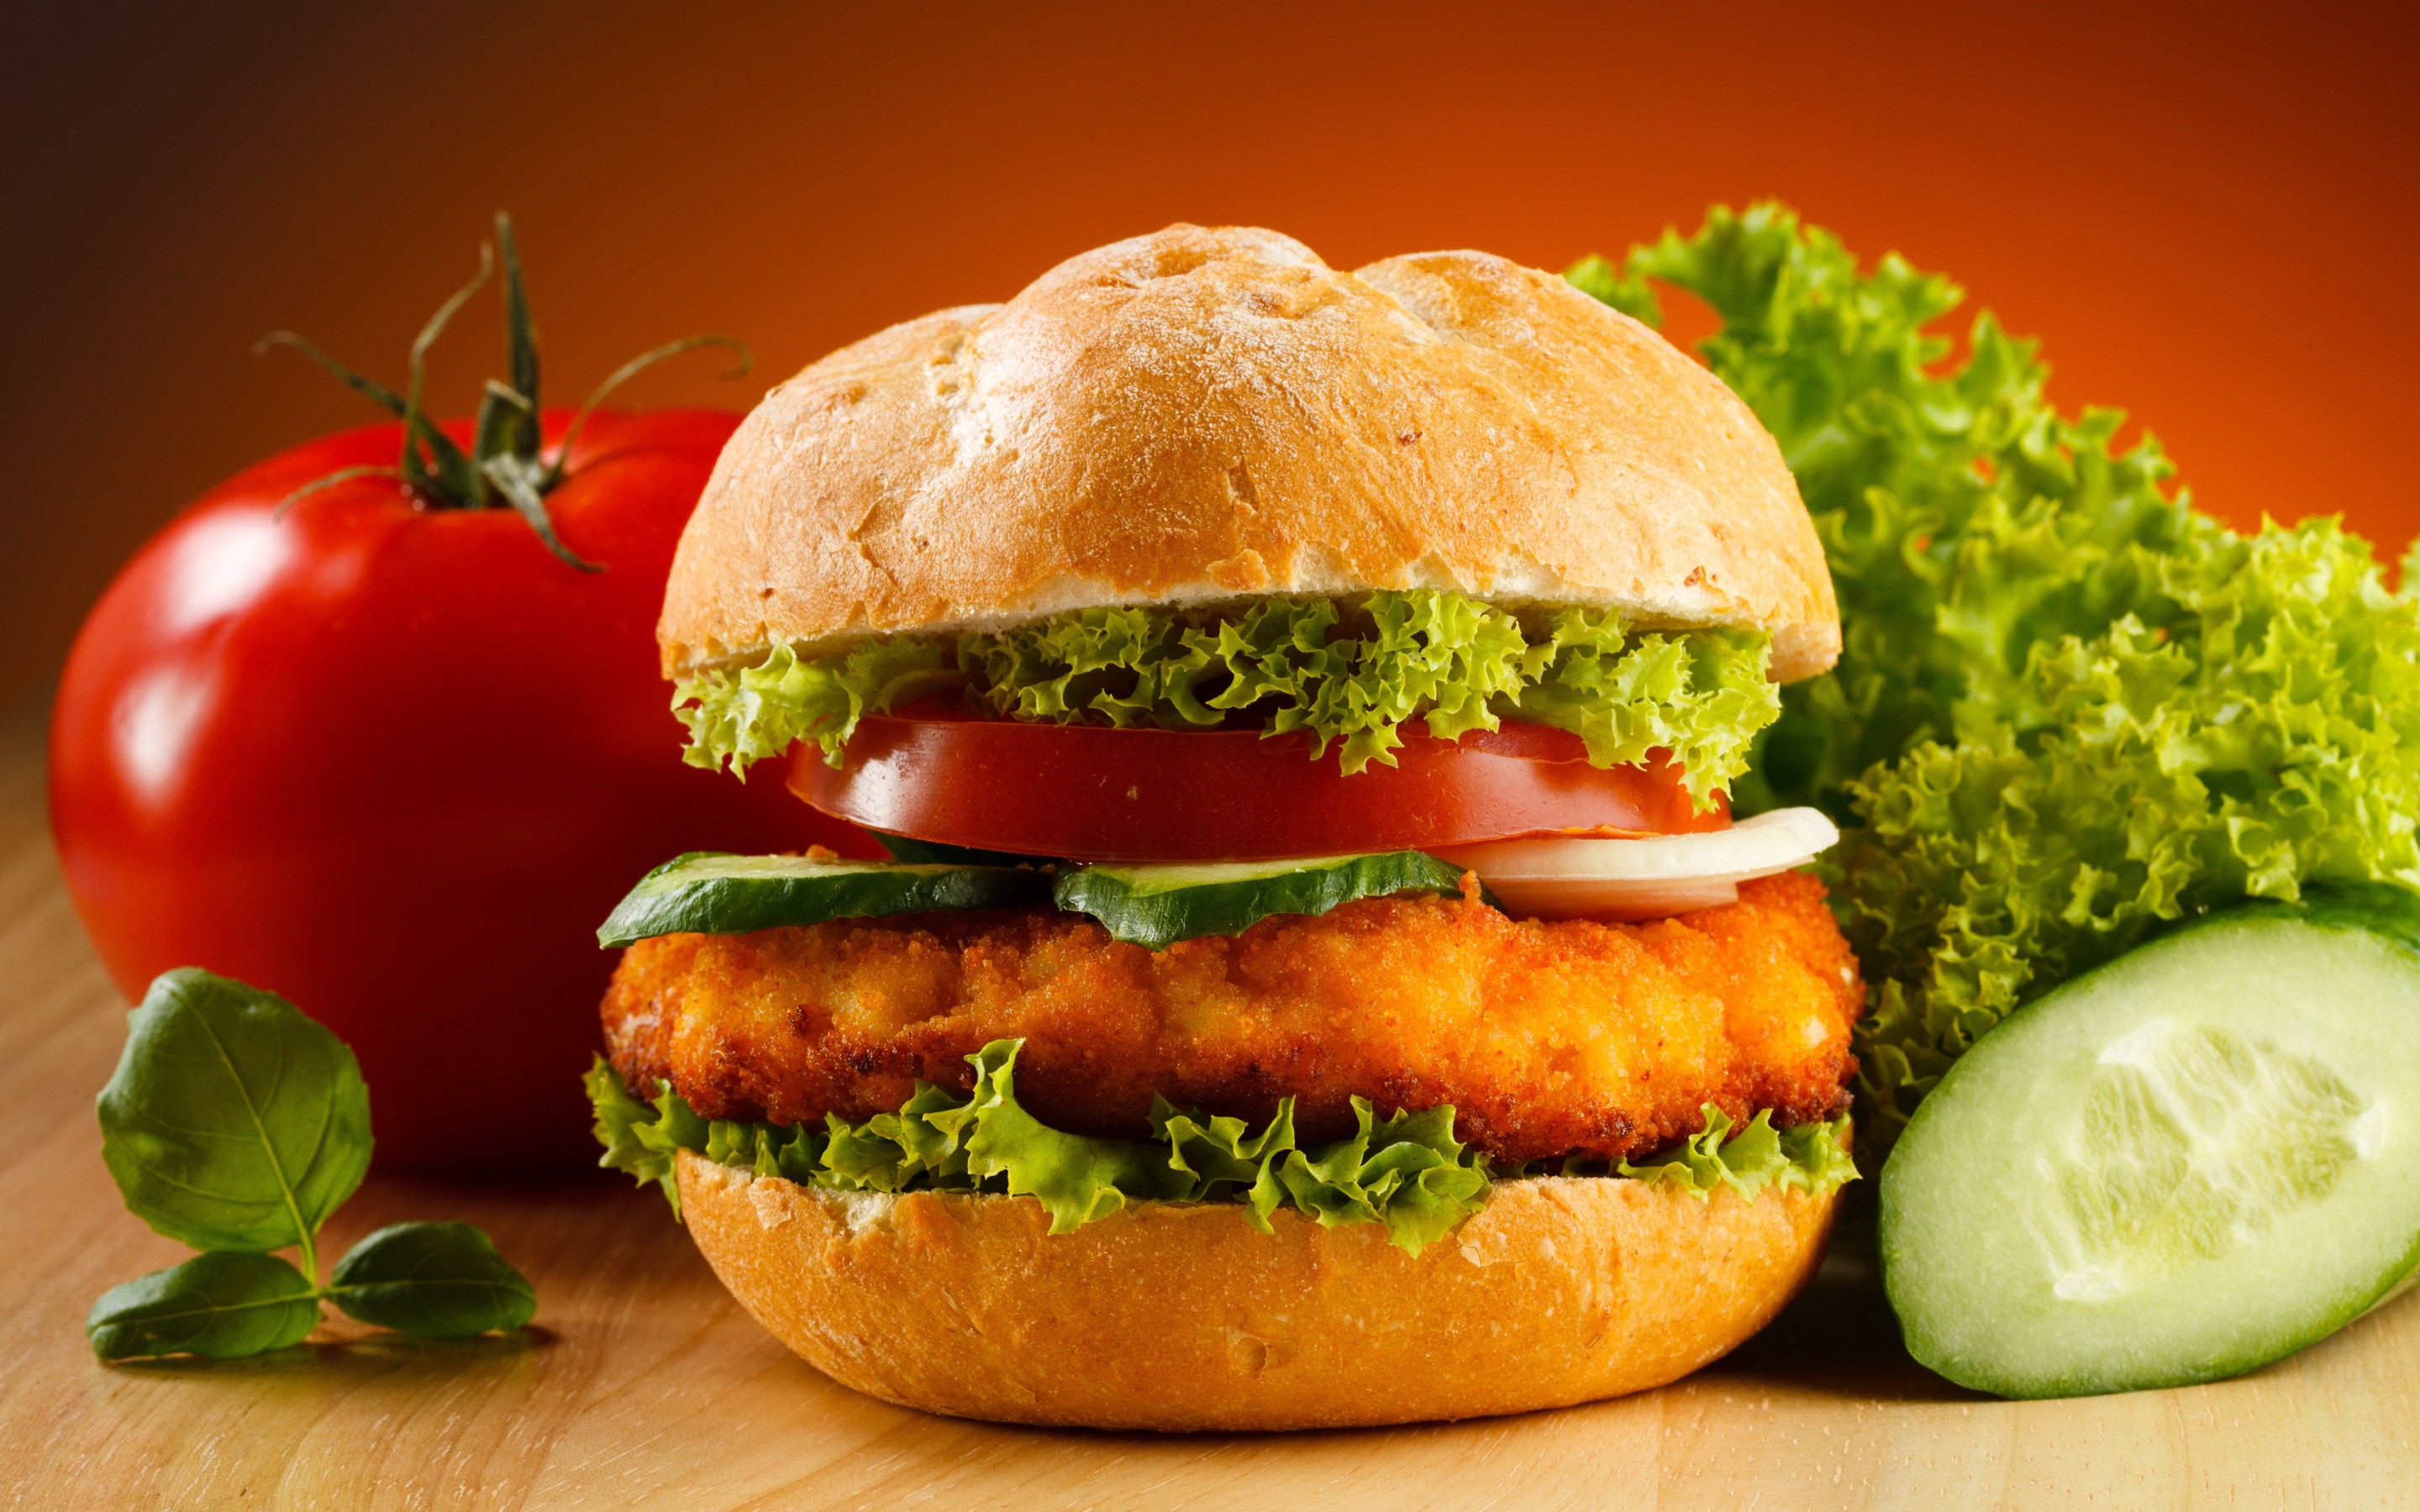 General 2880x1800 burgers food tomatoes vegetables meat pickles salad red background